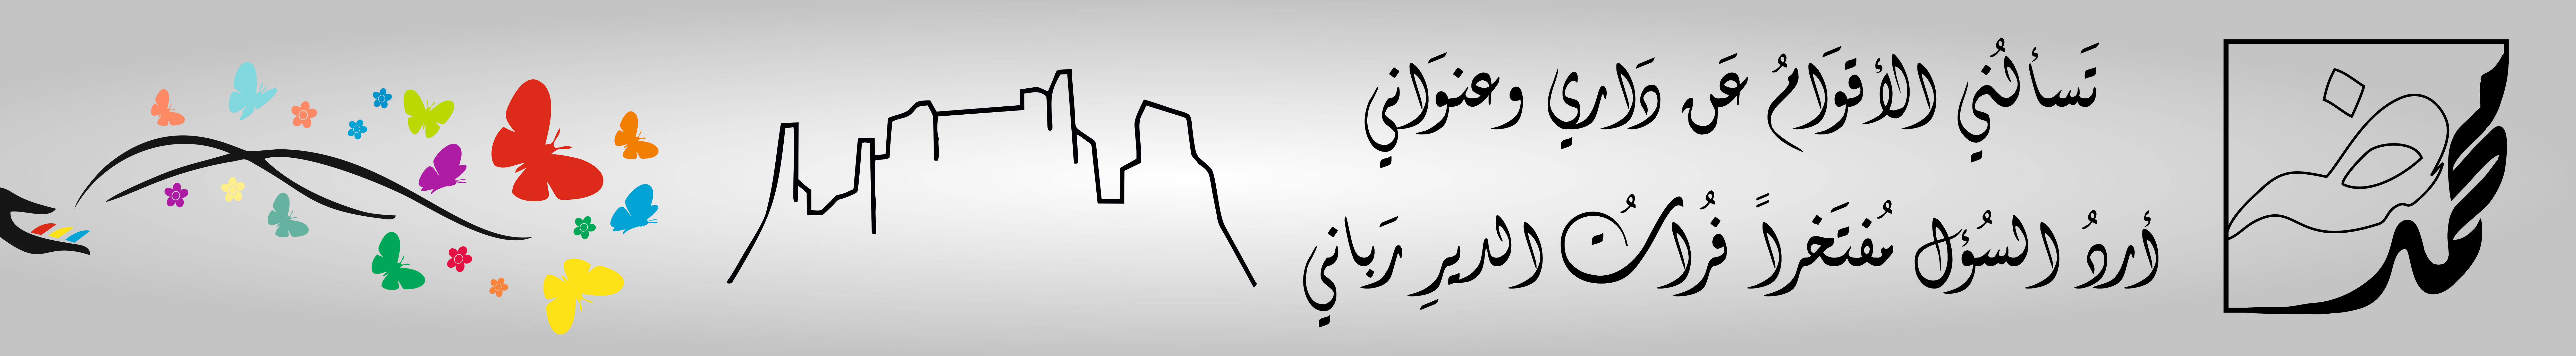 Muhammed Dwyhi's profile banner